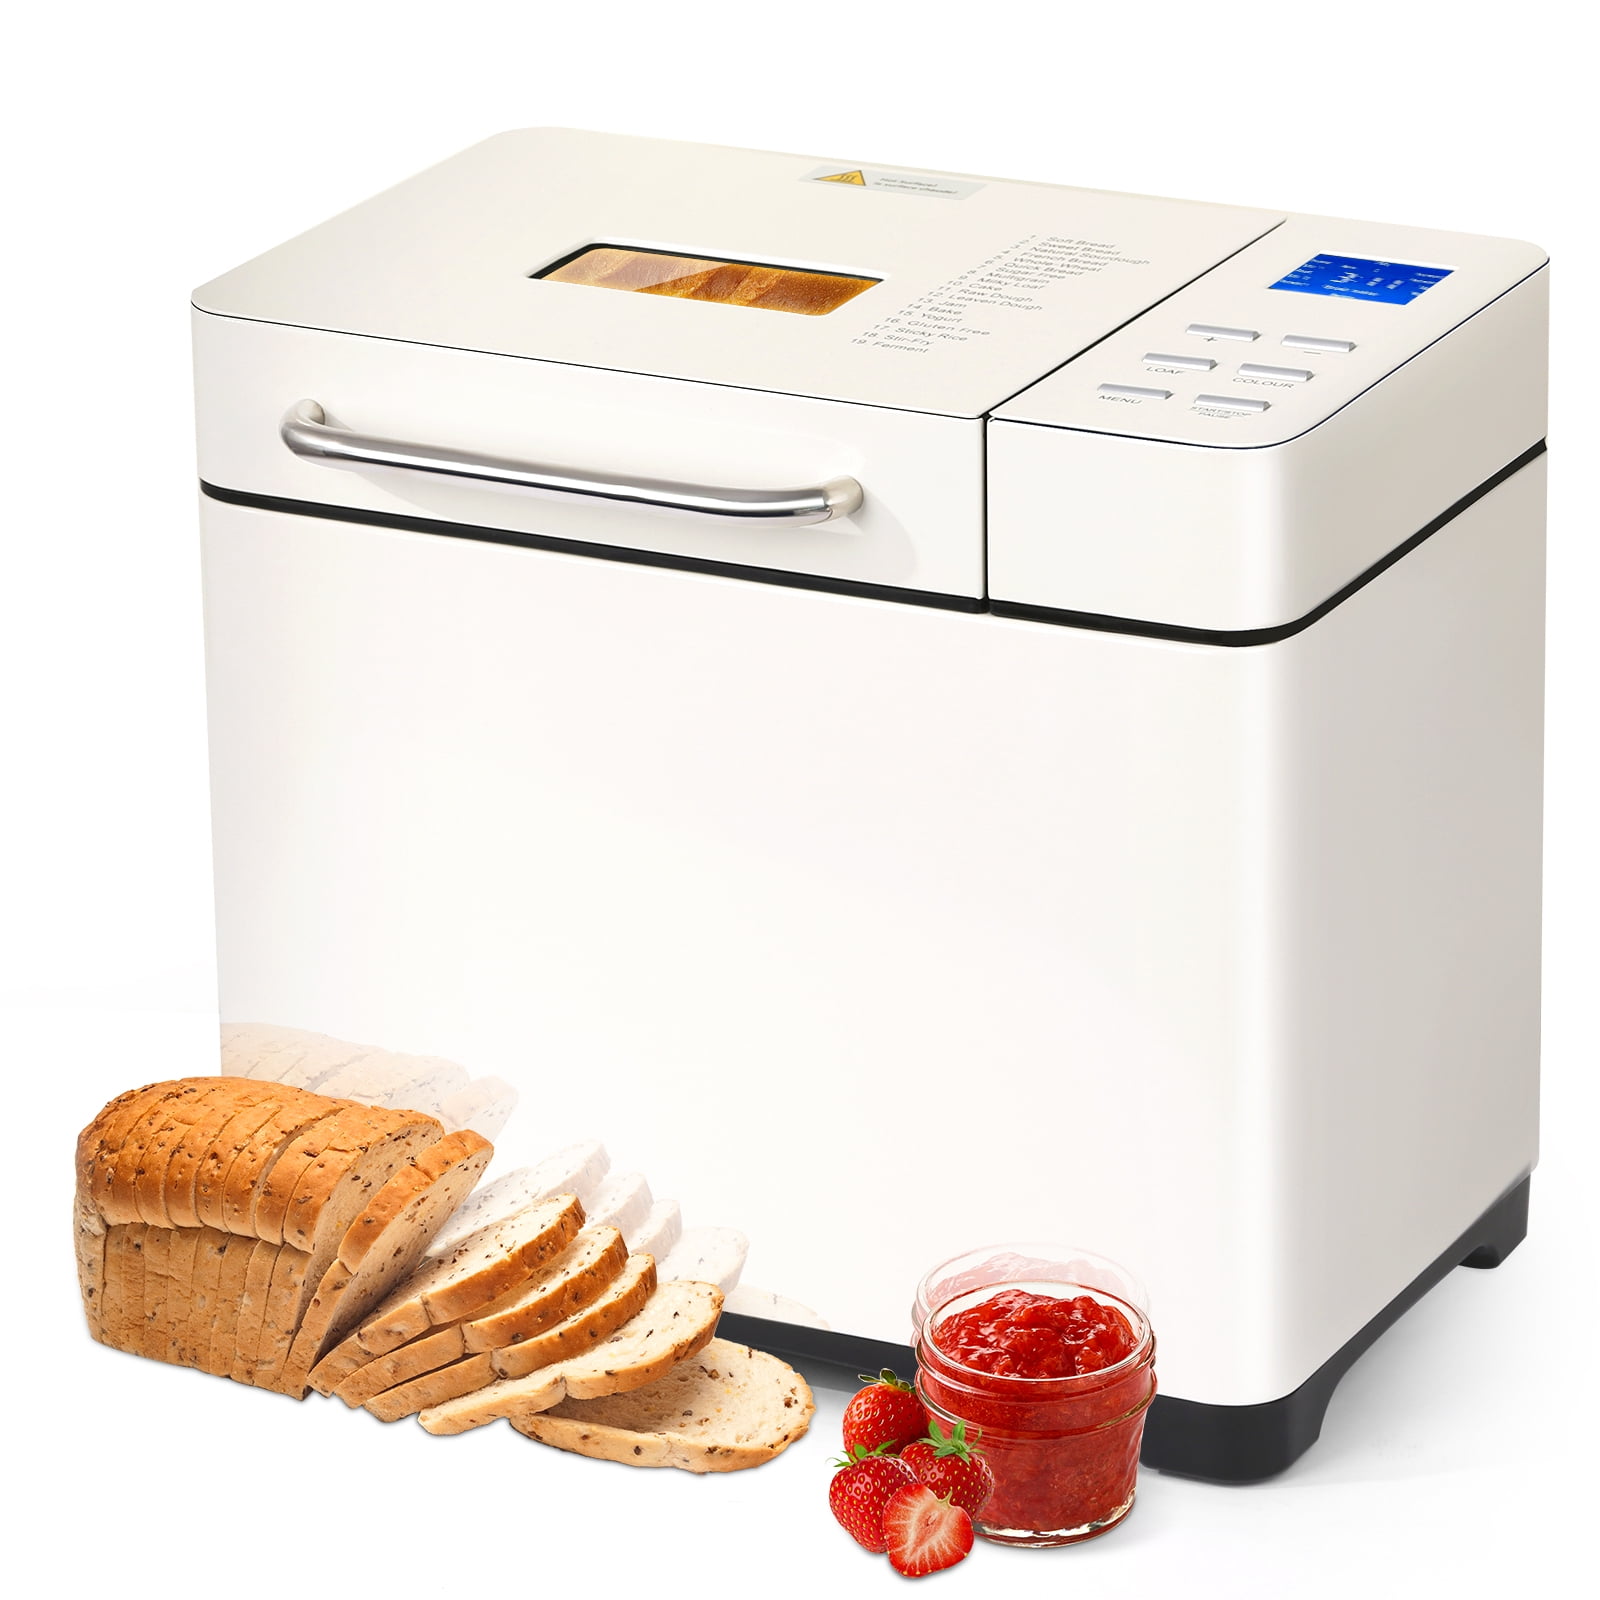 Kenmore Automatic Bread Maker - Model 48487 - 2 lb. Loaf - New